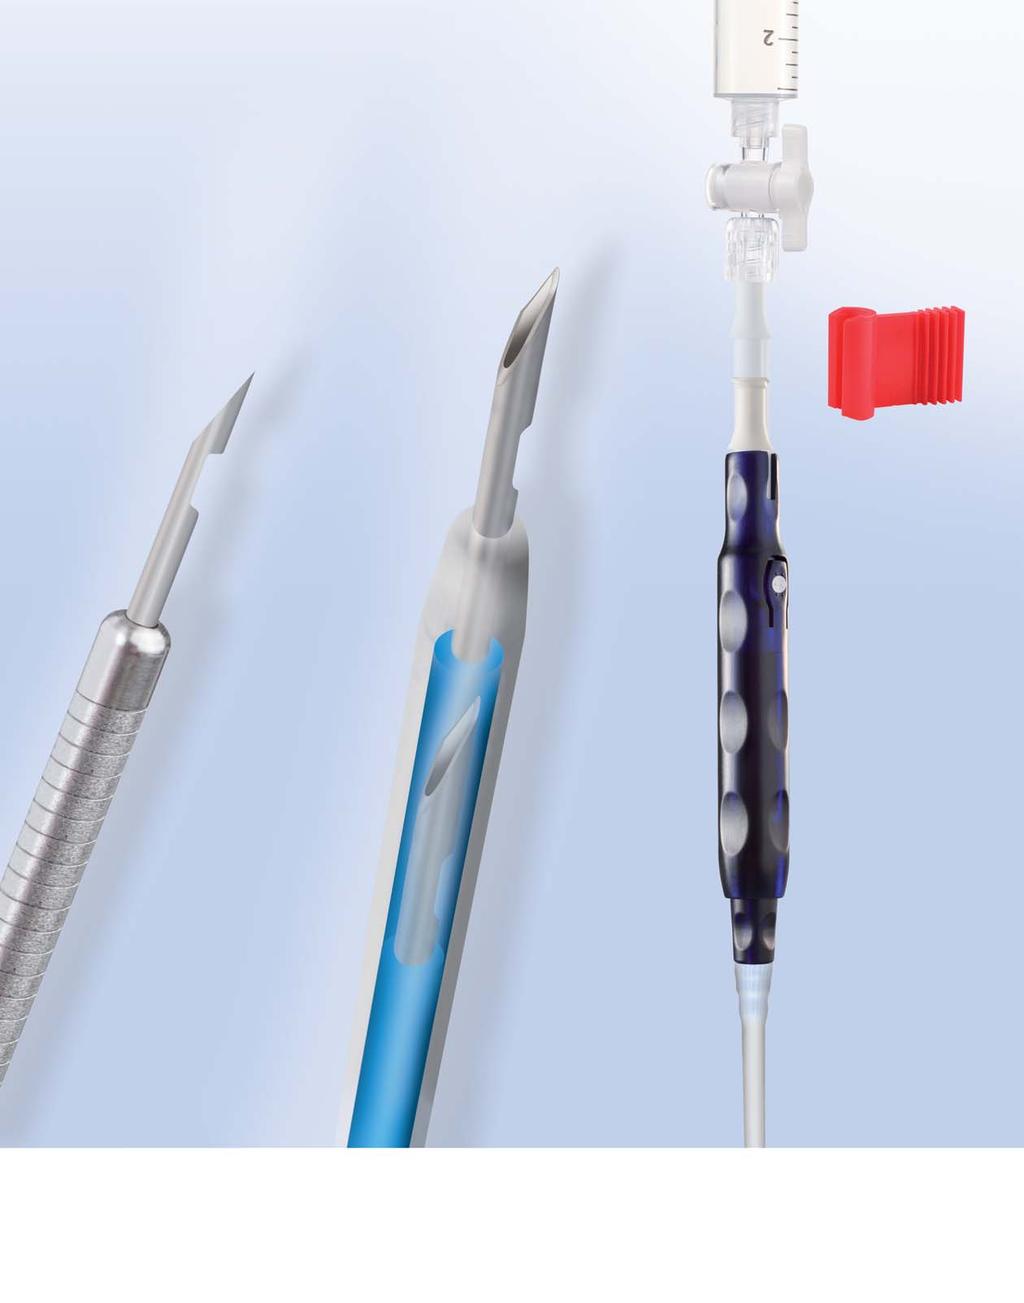 Aspiration Needles for Bronchoscopy & Gastroscopy - Single Use Aspiration Needles Coaxial Luer-Lock for Vacuum Syringe Easy Aspiration of Cells Safety